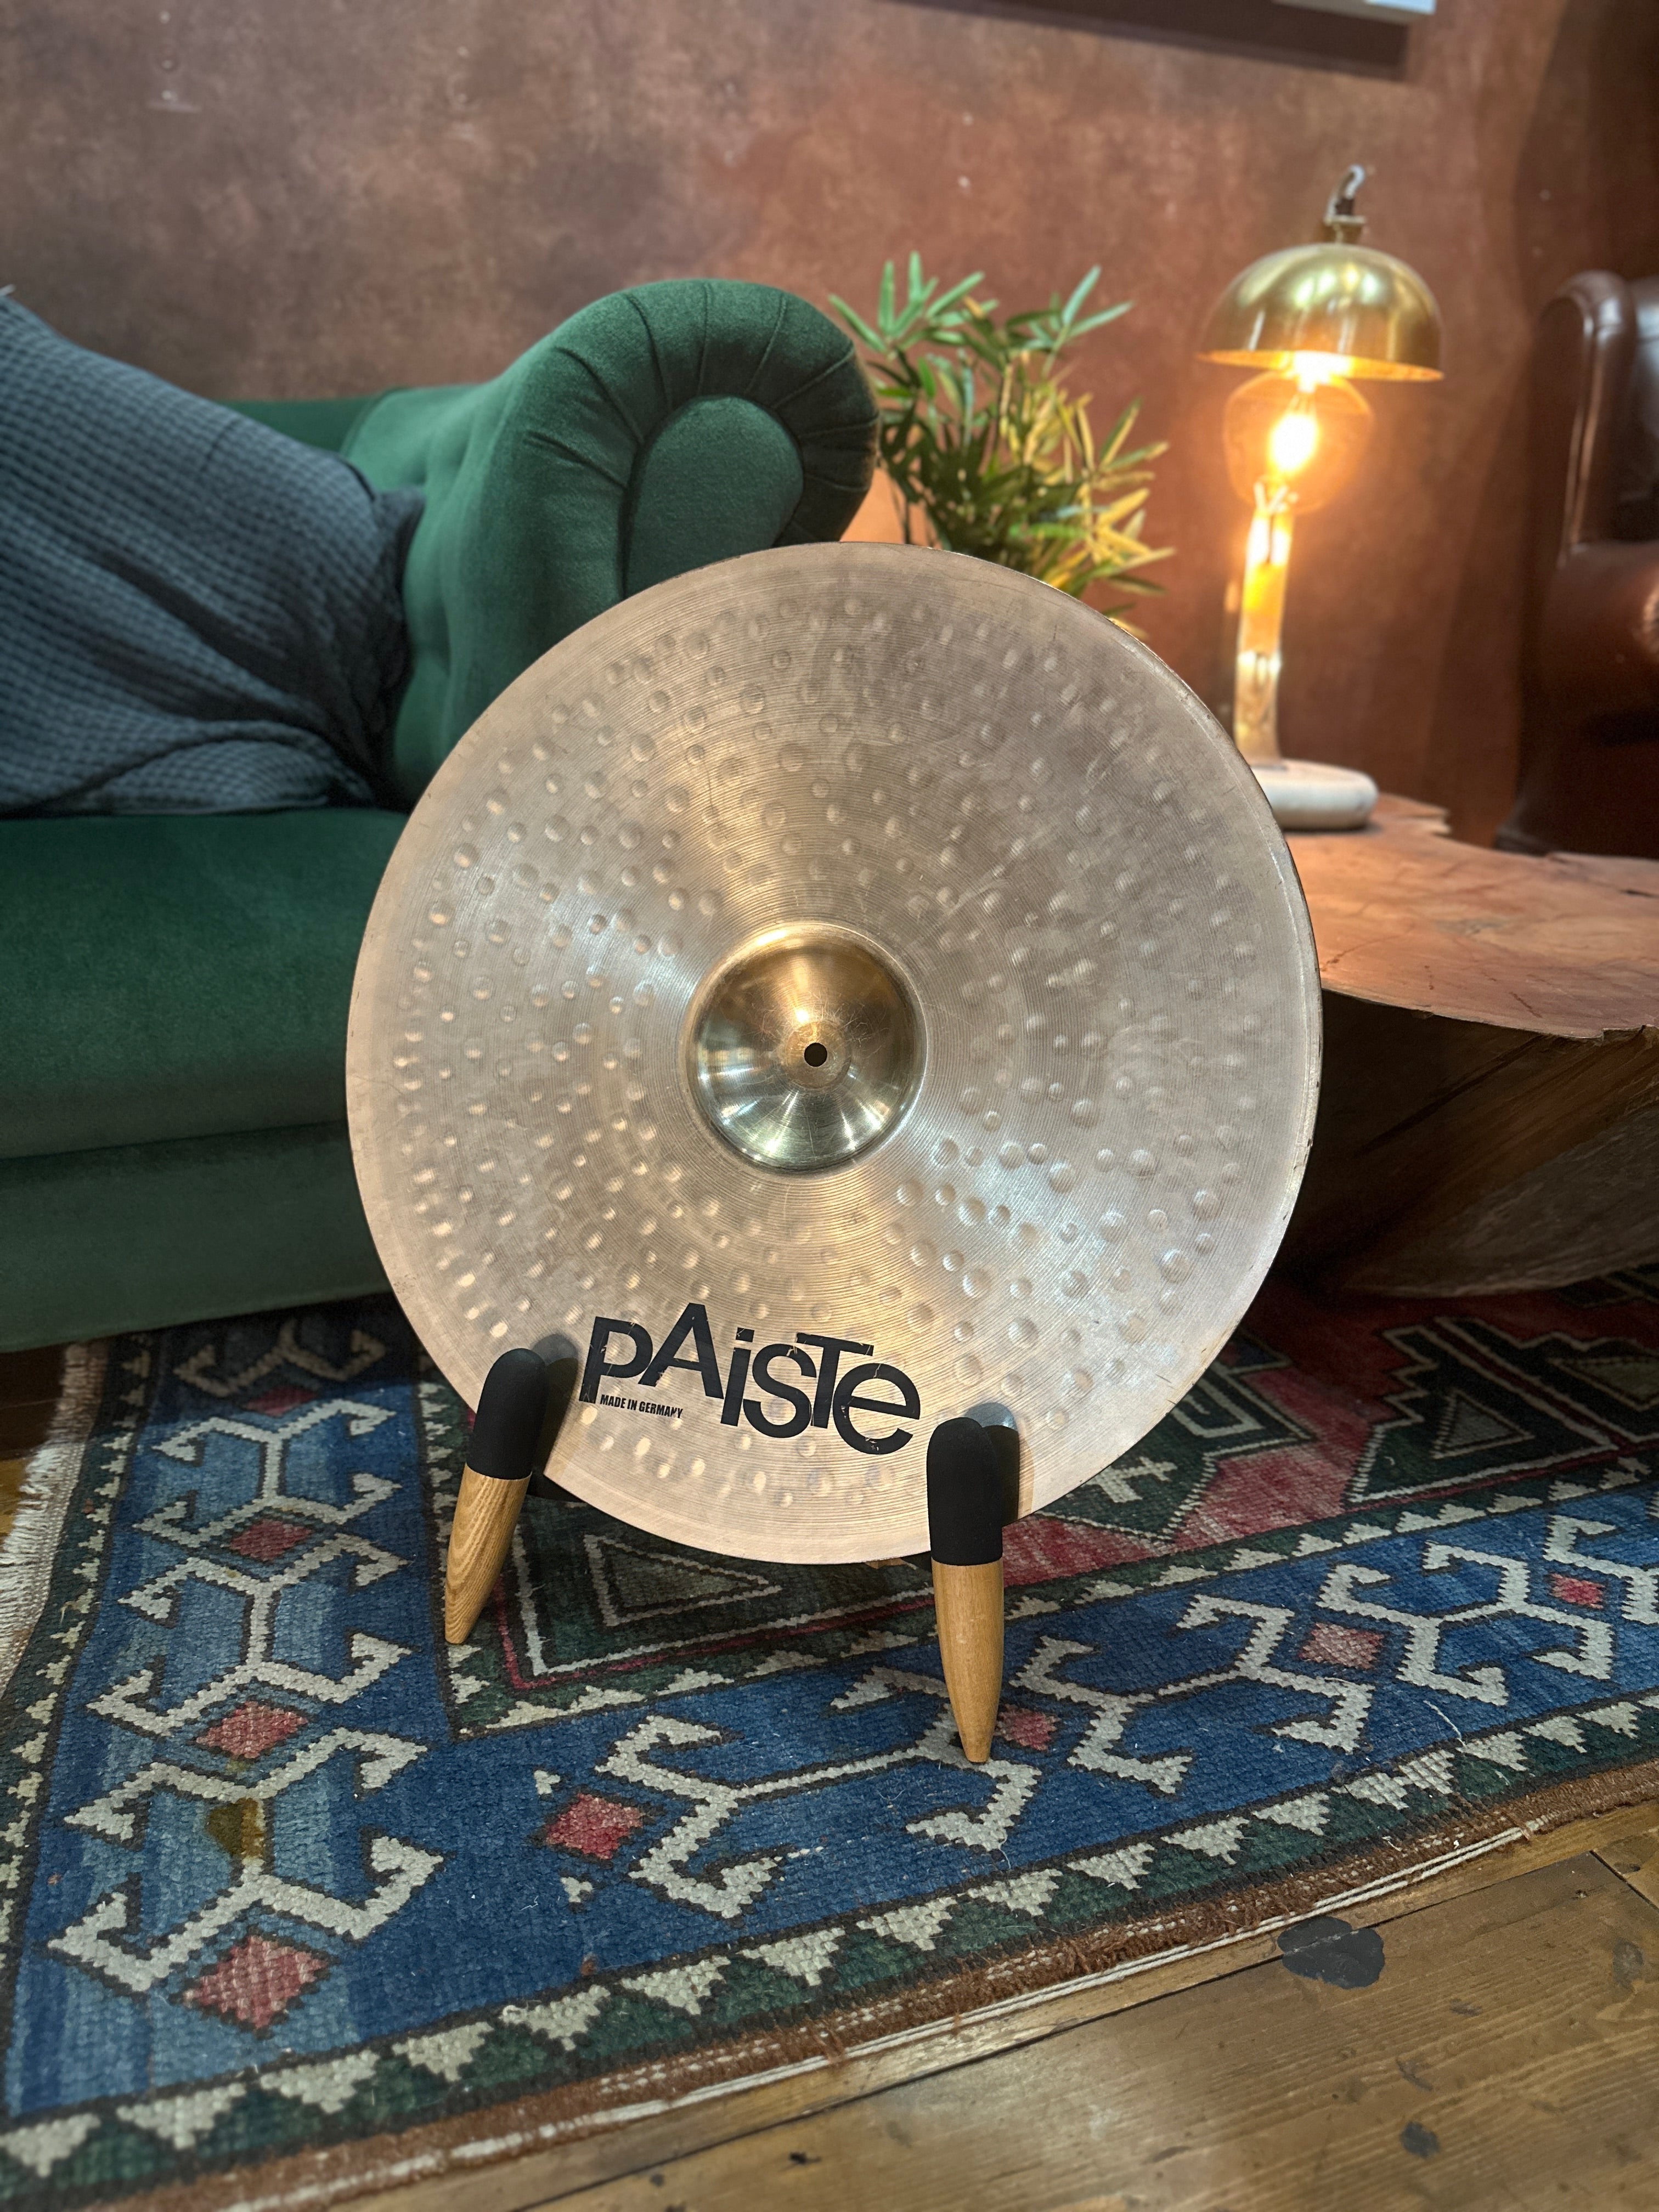 Paiste PST5 20" Ride Cymbal